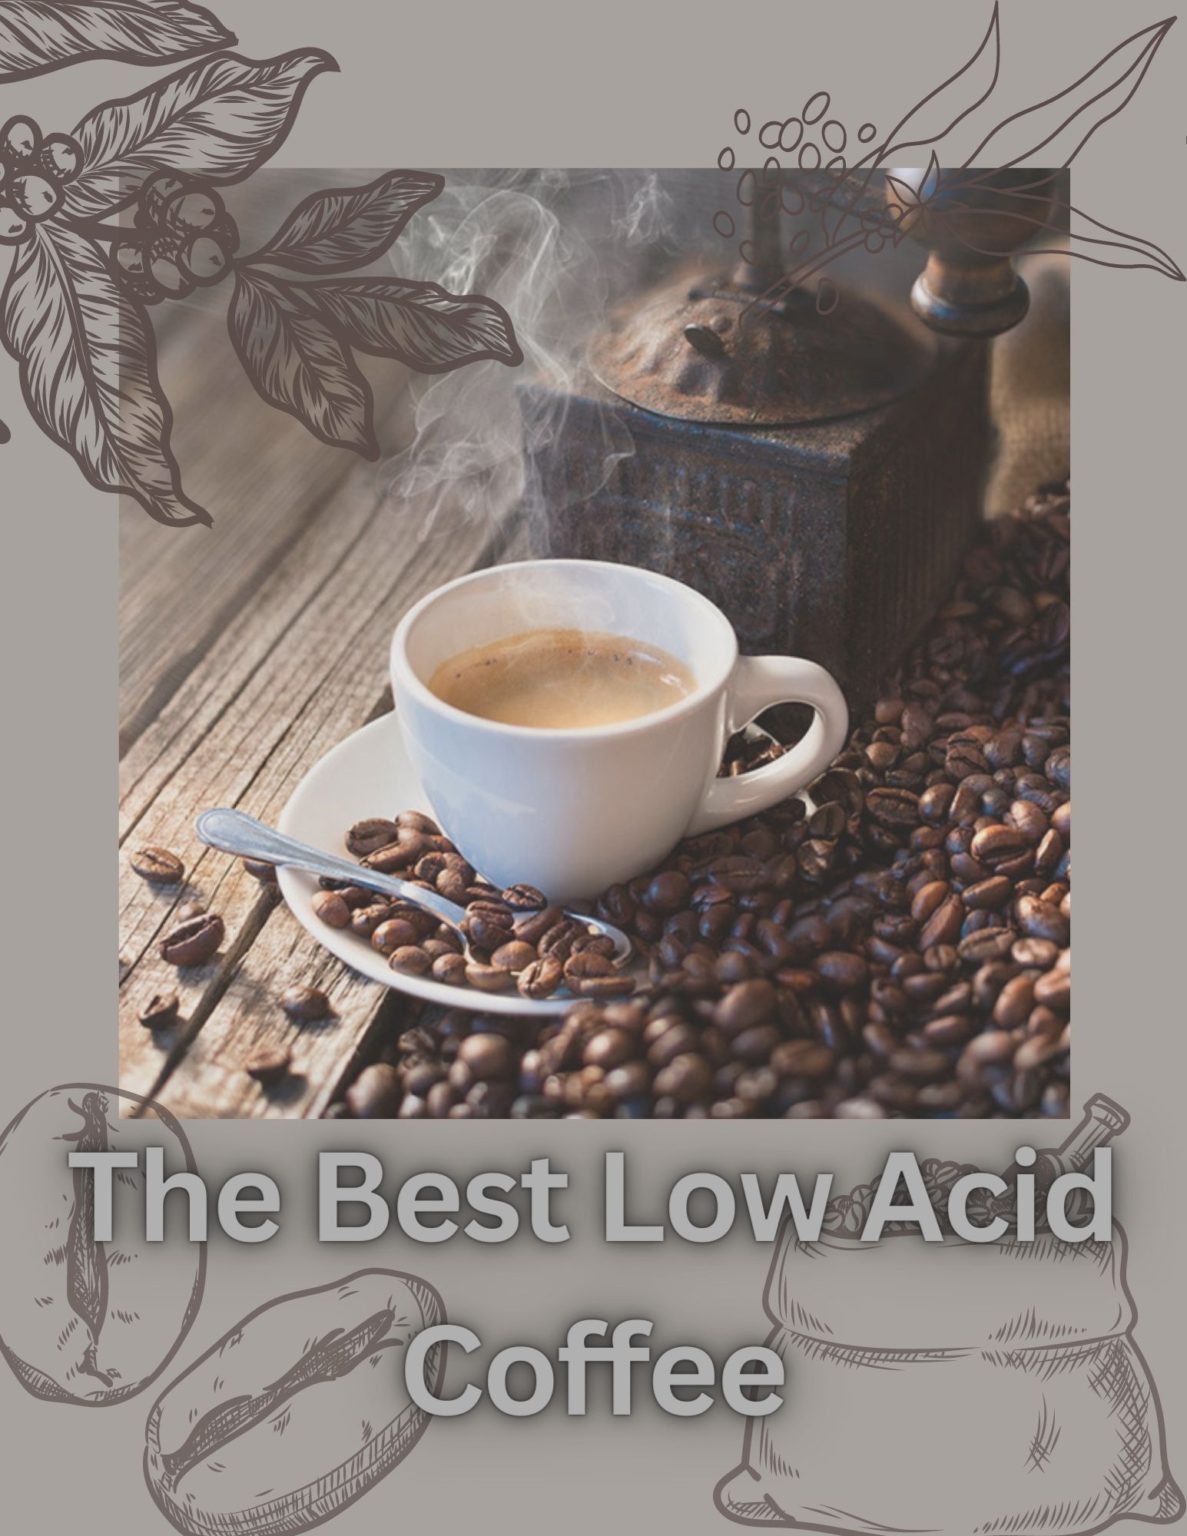 Low Acid Coffee